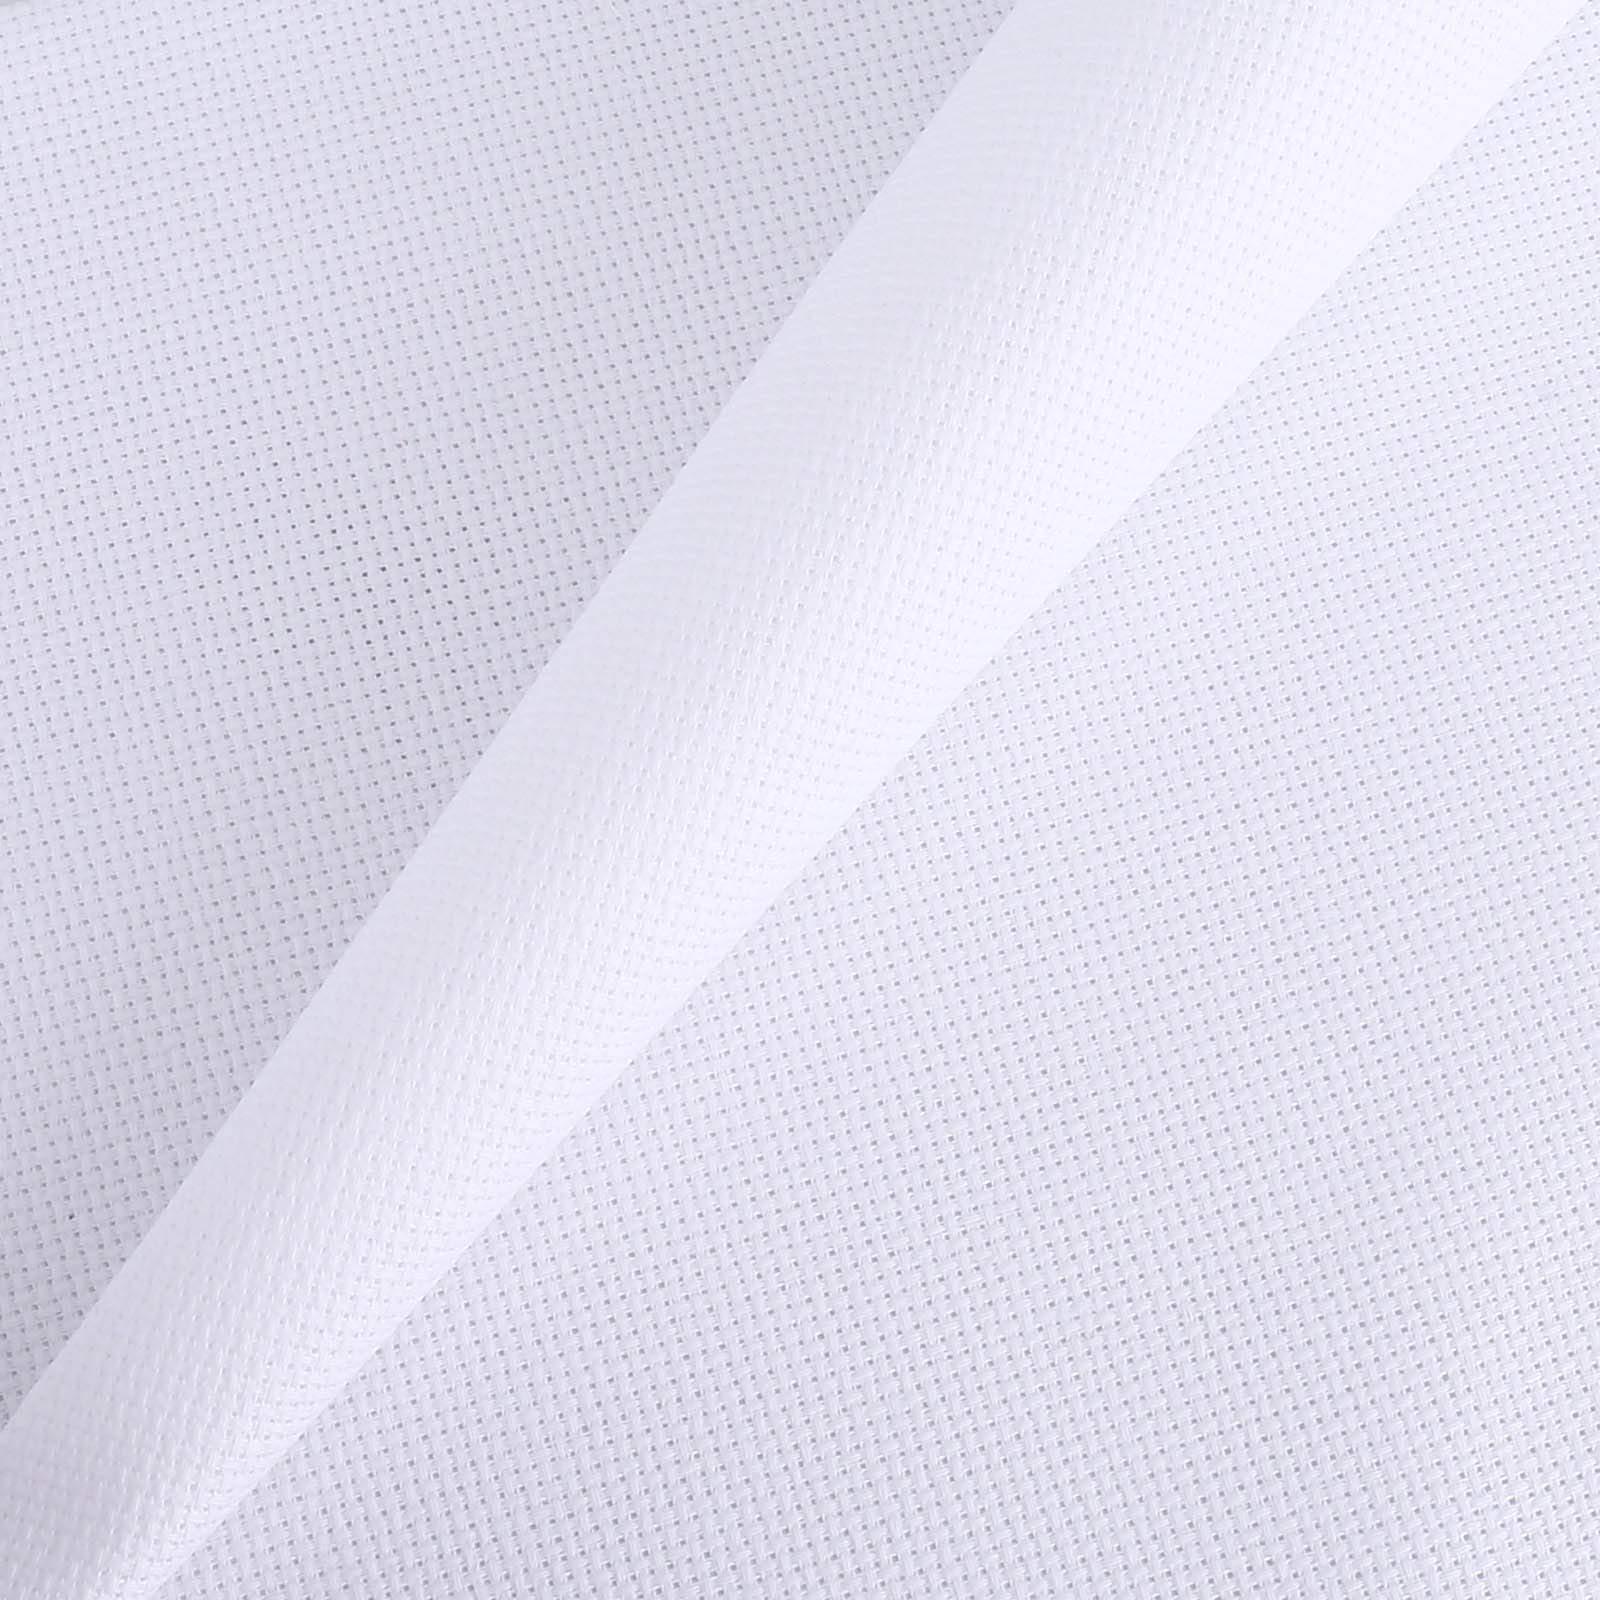 DONMON aida cloth 18 count cross stitch fabric,6039inch (18ct white)